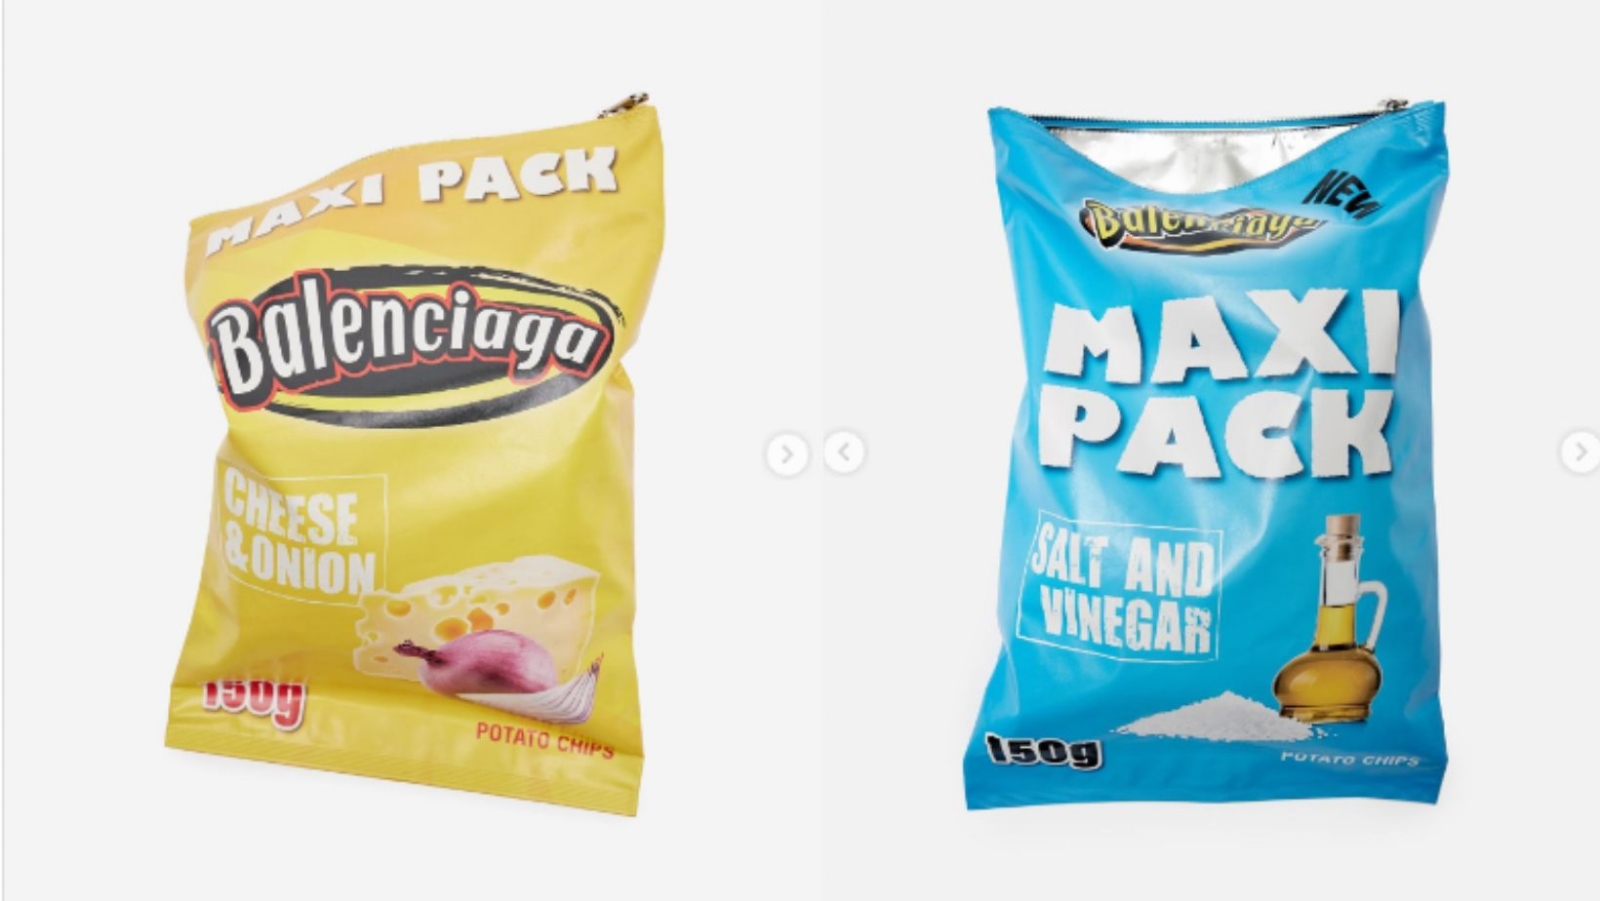 Balenciaga vende bolso estilo 'chips' en más de 38 mil pesos: FOTOS